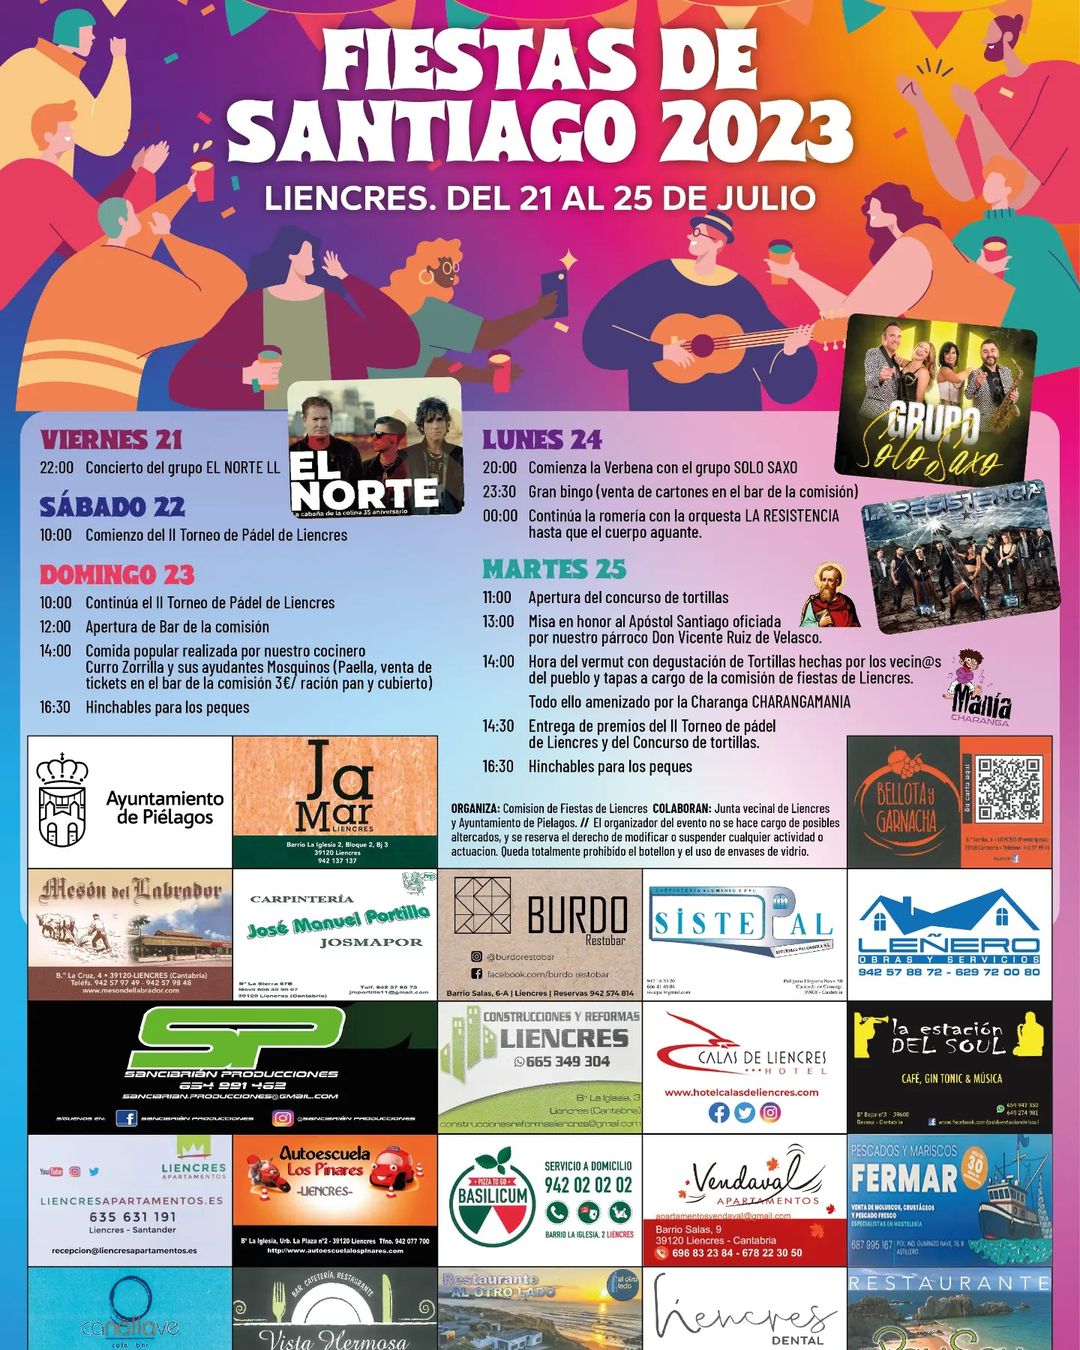 Fiestas de Santiago Liencres 2023